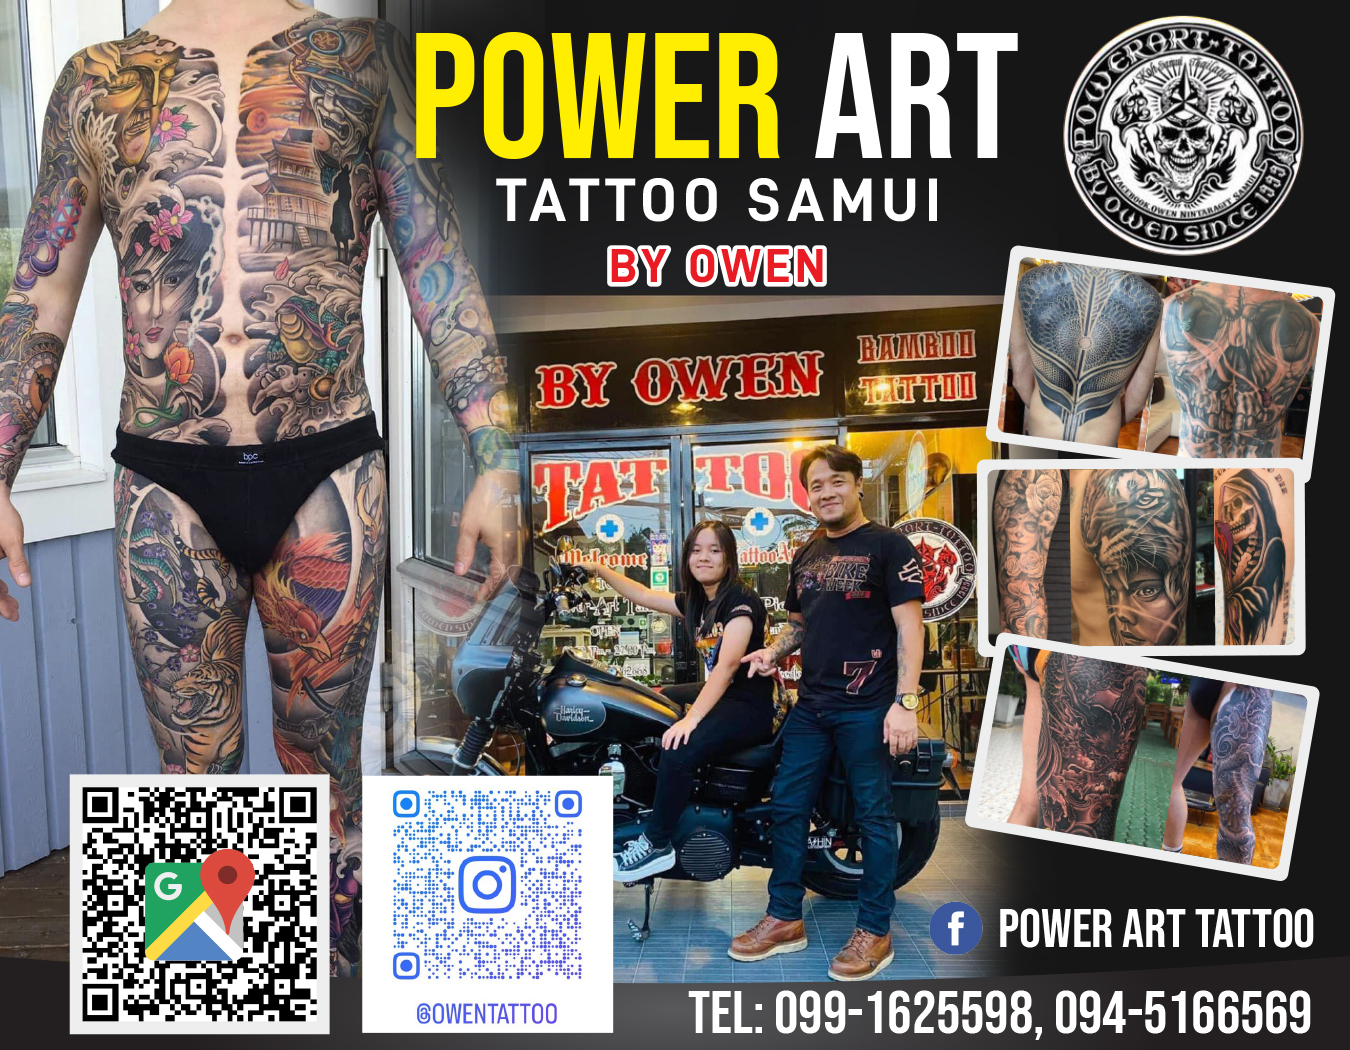 Power Art Tattoo Samui